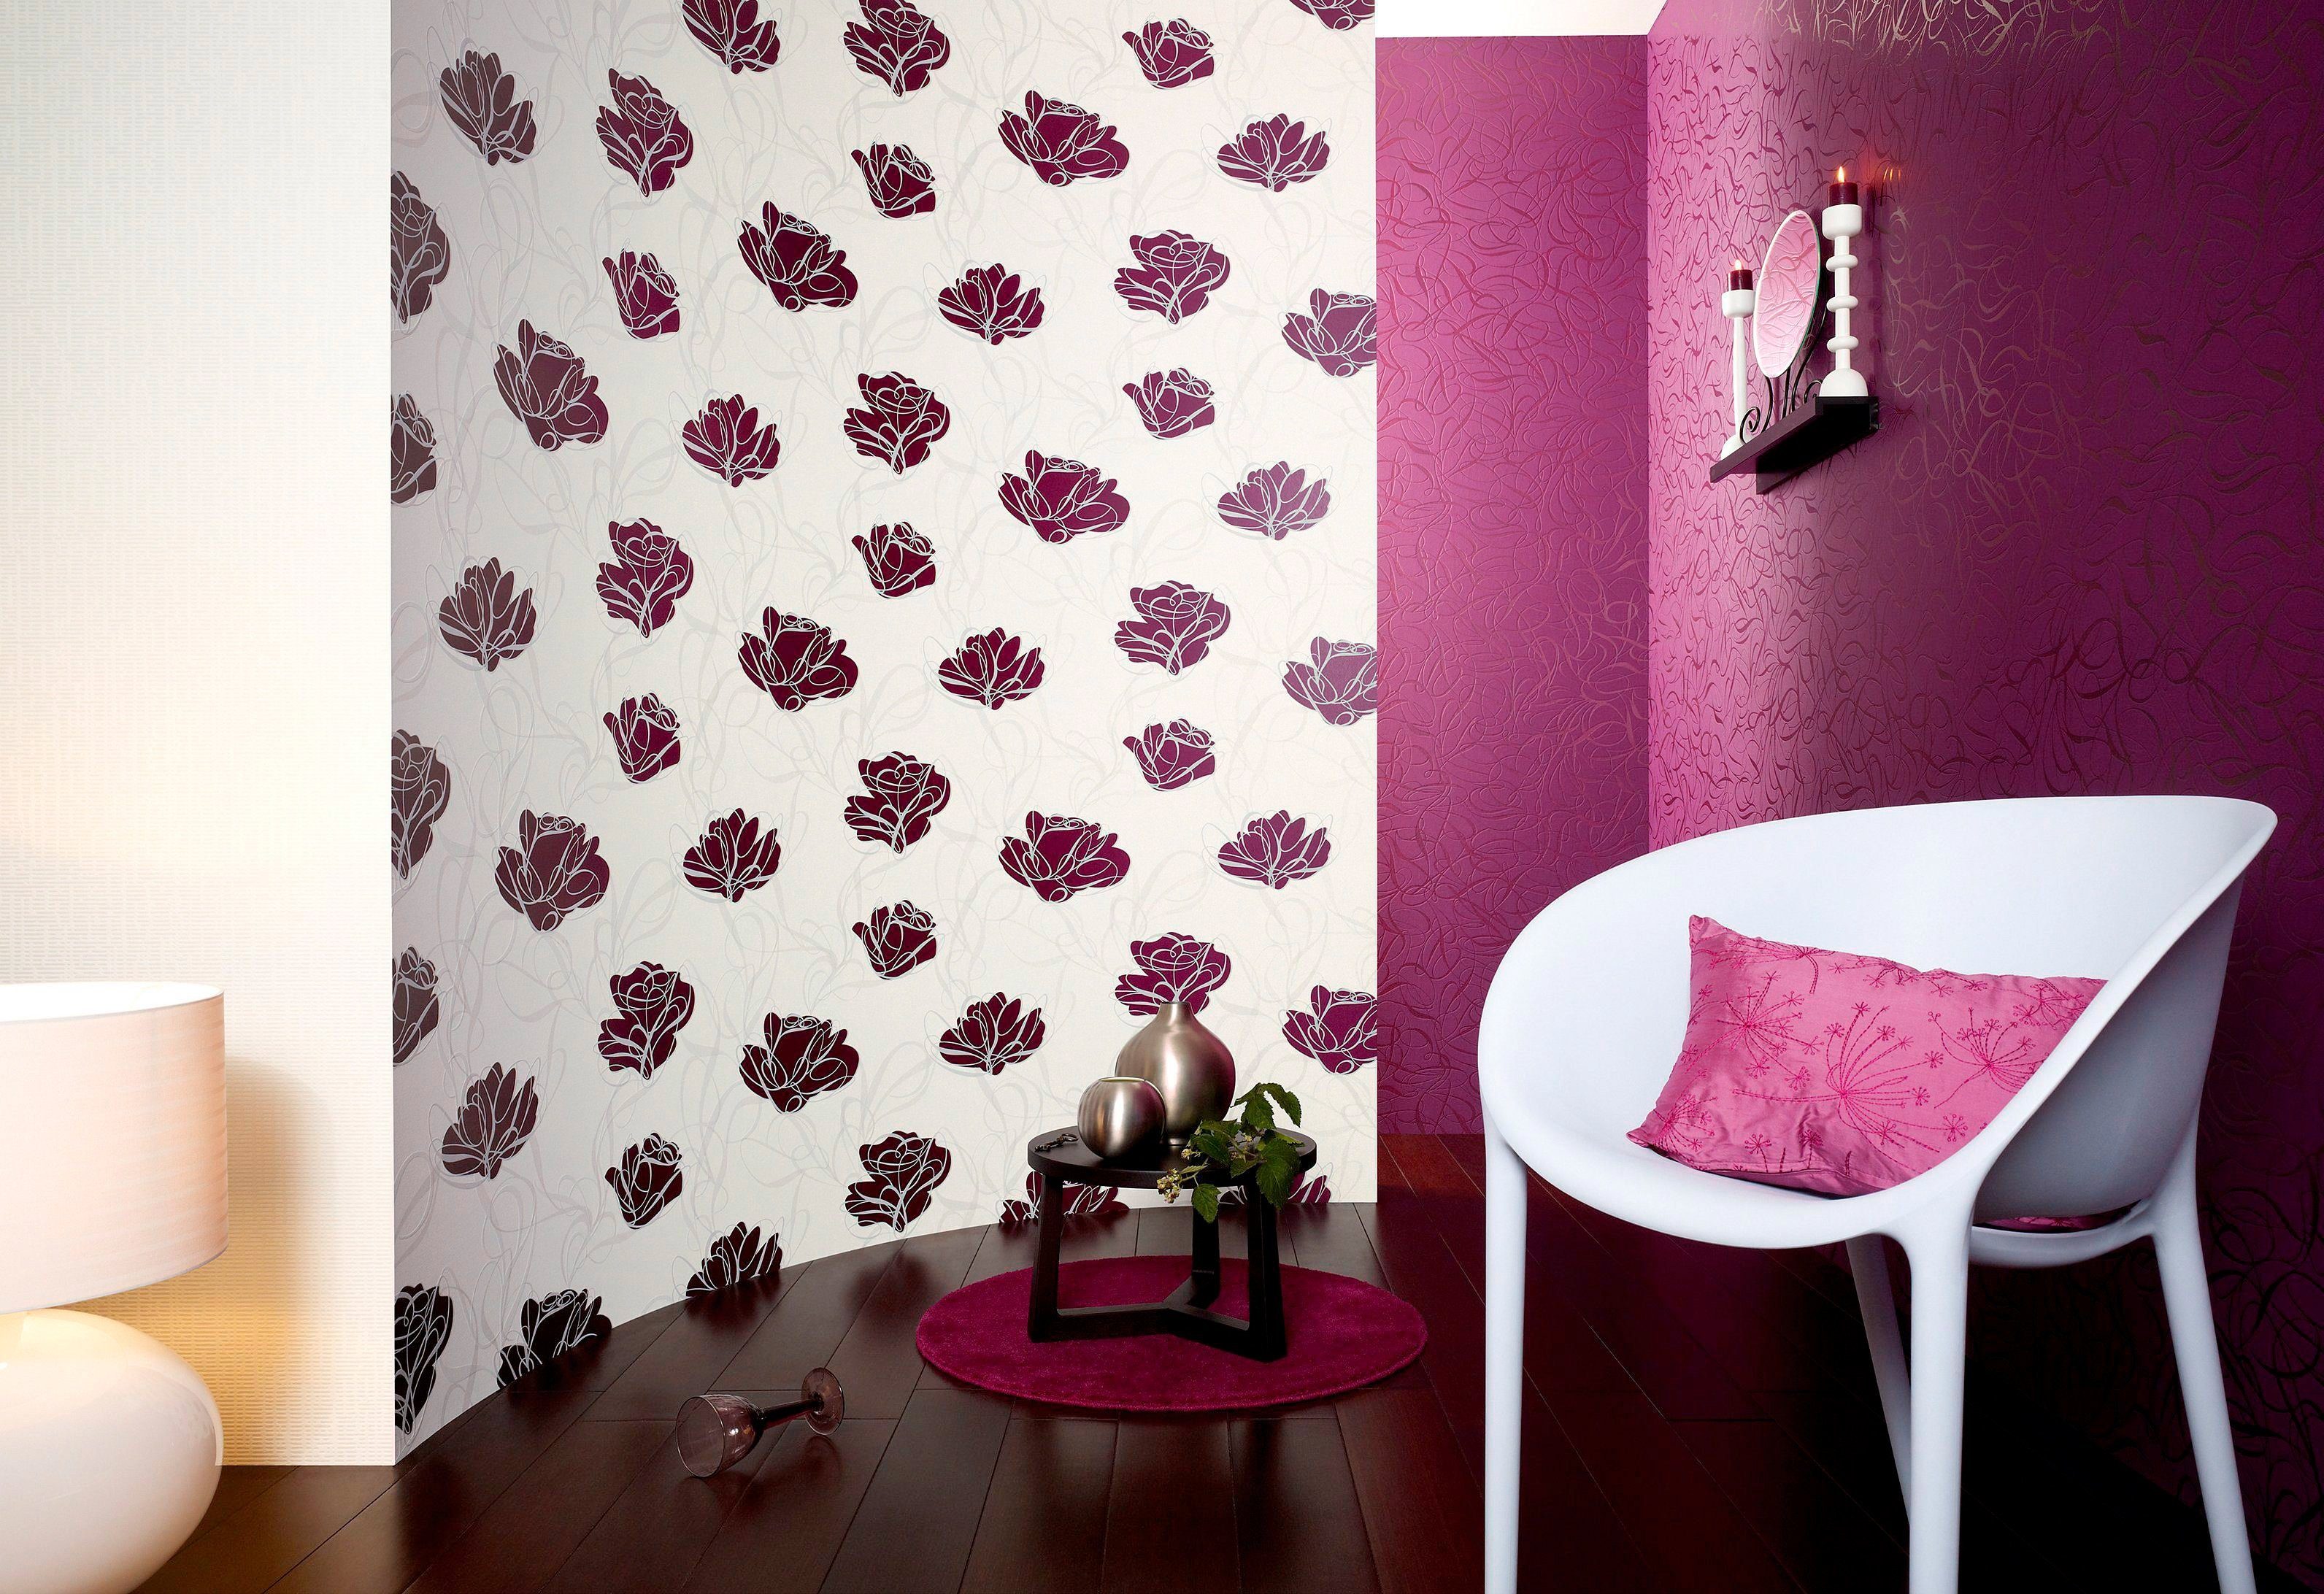 Vliestapete Grafik Création violett/pflaume A.S. Fairyland, walls living geblümt, Floral floral, Tapete